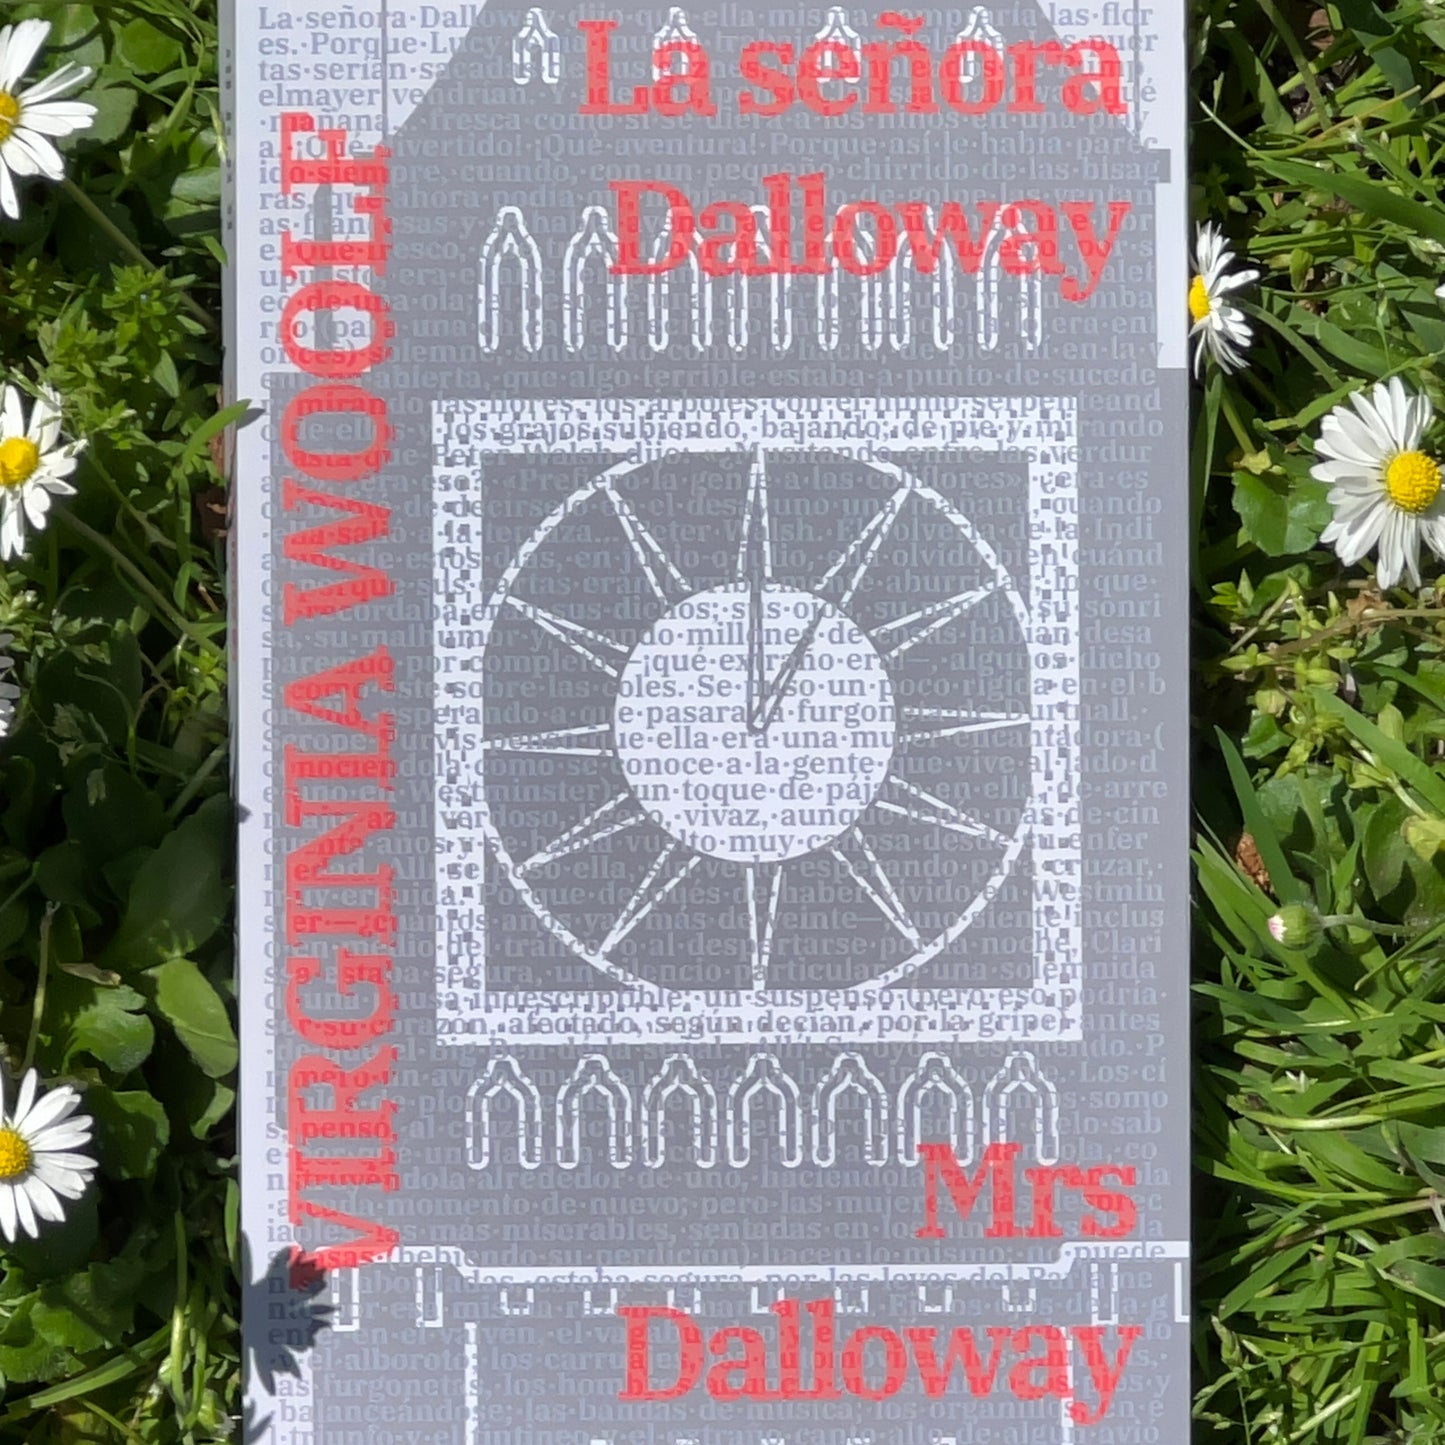 La señora Dalloway - Mrs Dalloway | Libro bilingüe - Español / Inglés